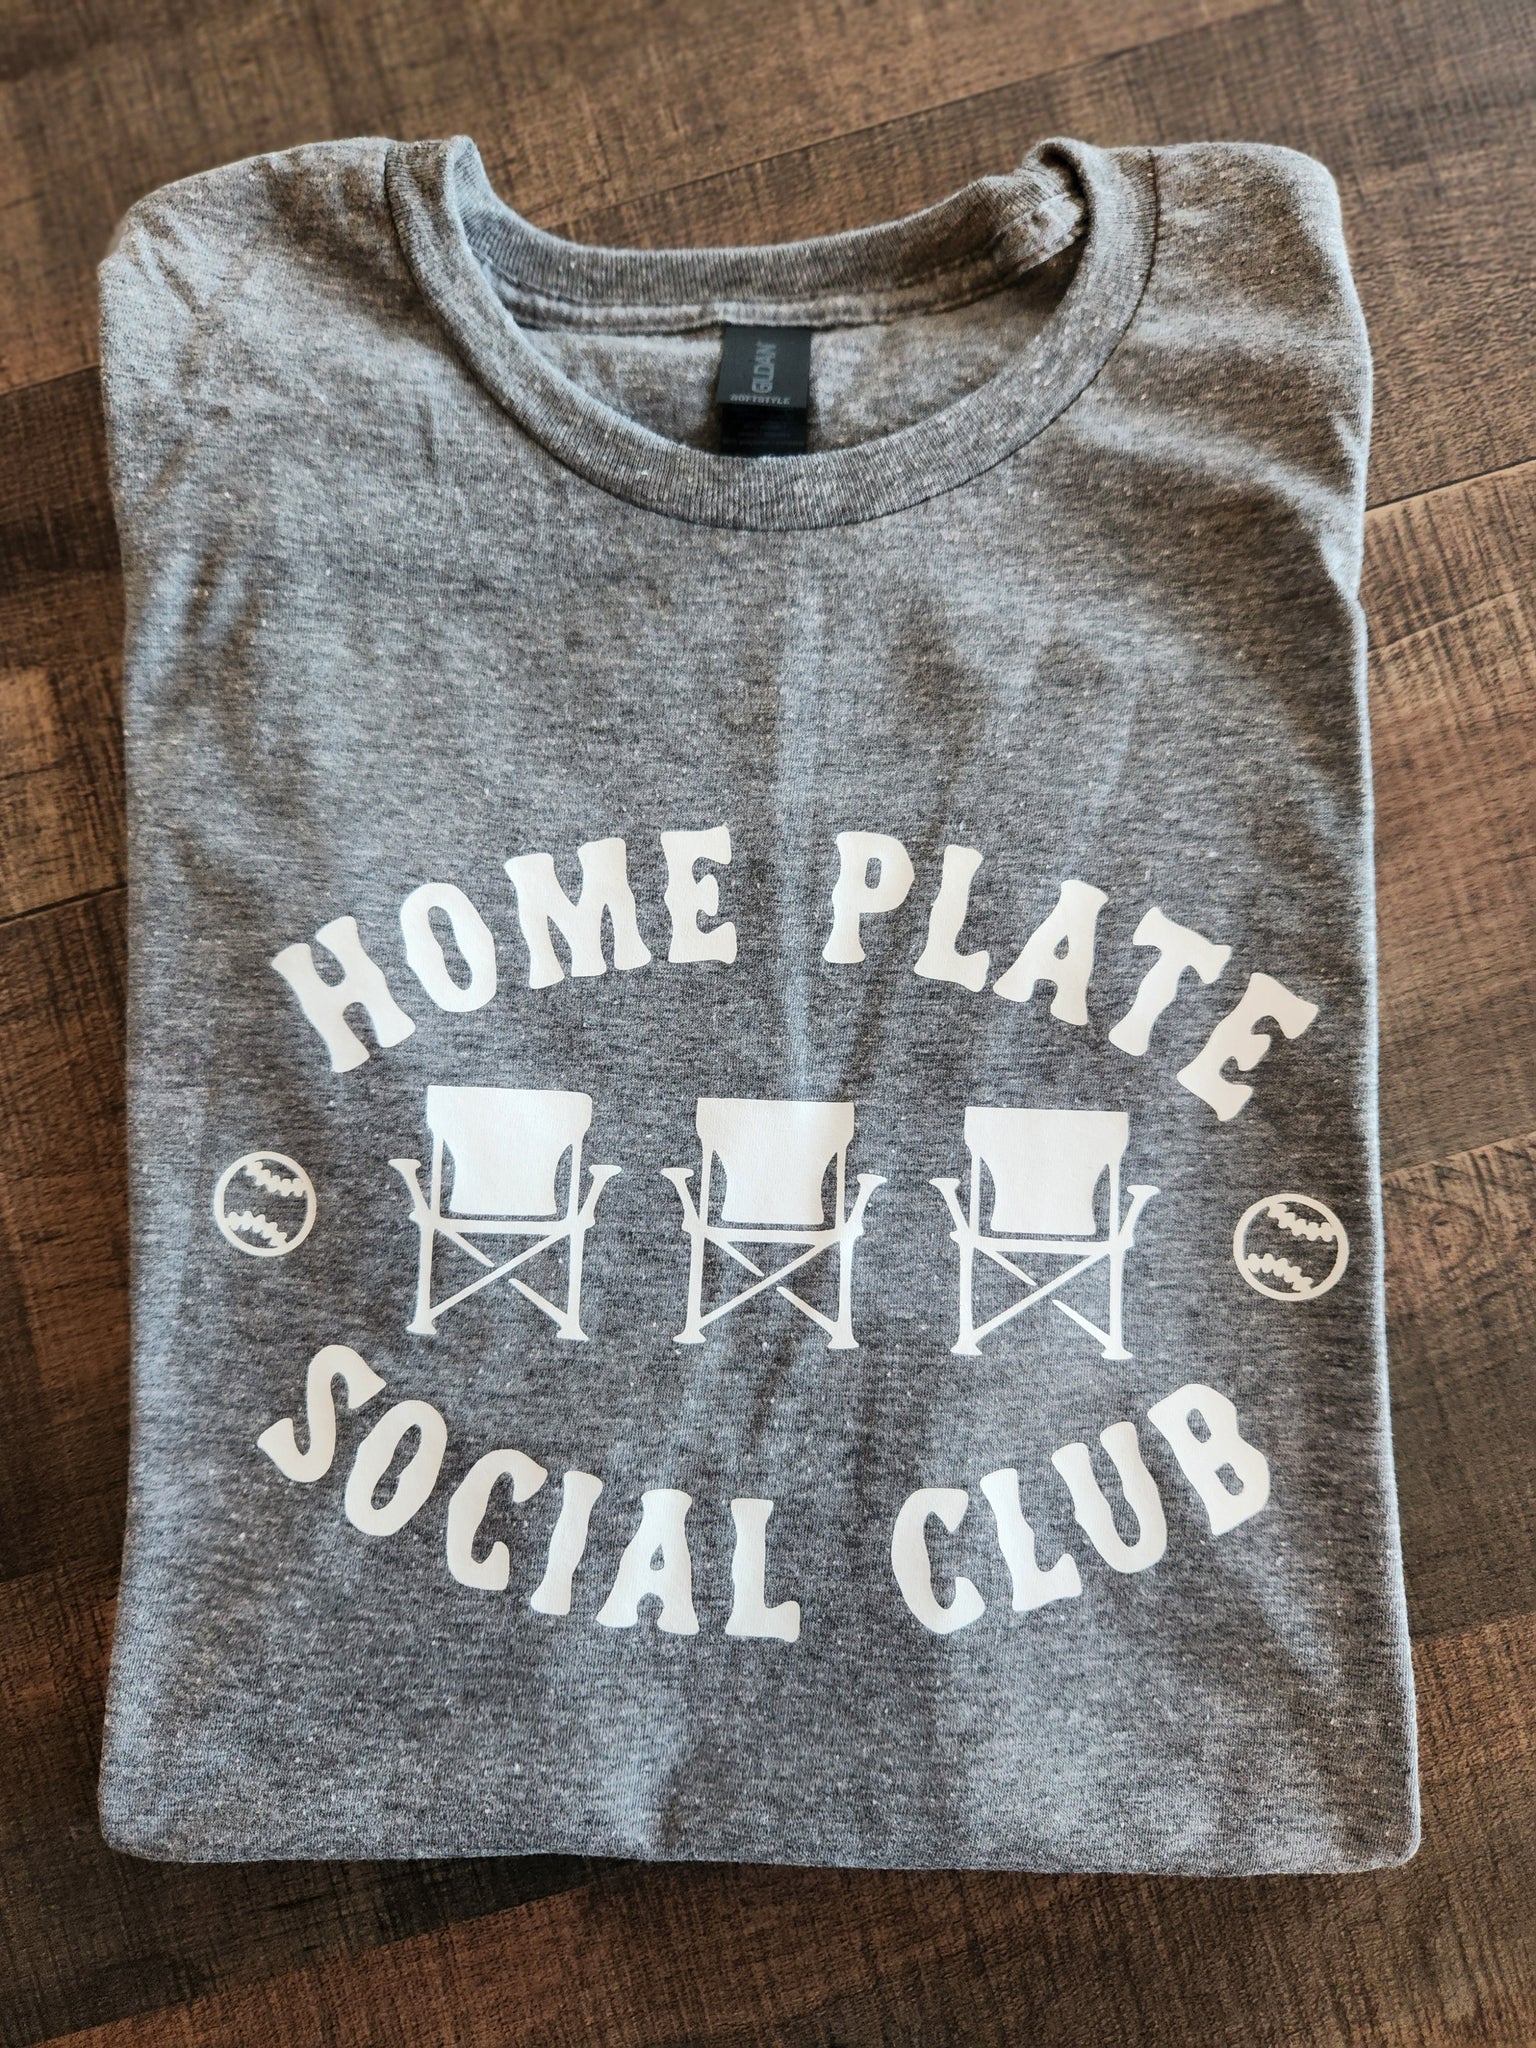 HOME PLATE SOCIAL CLUB